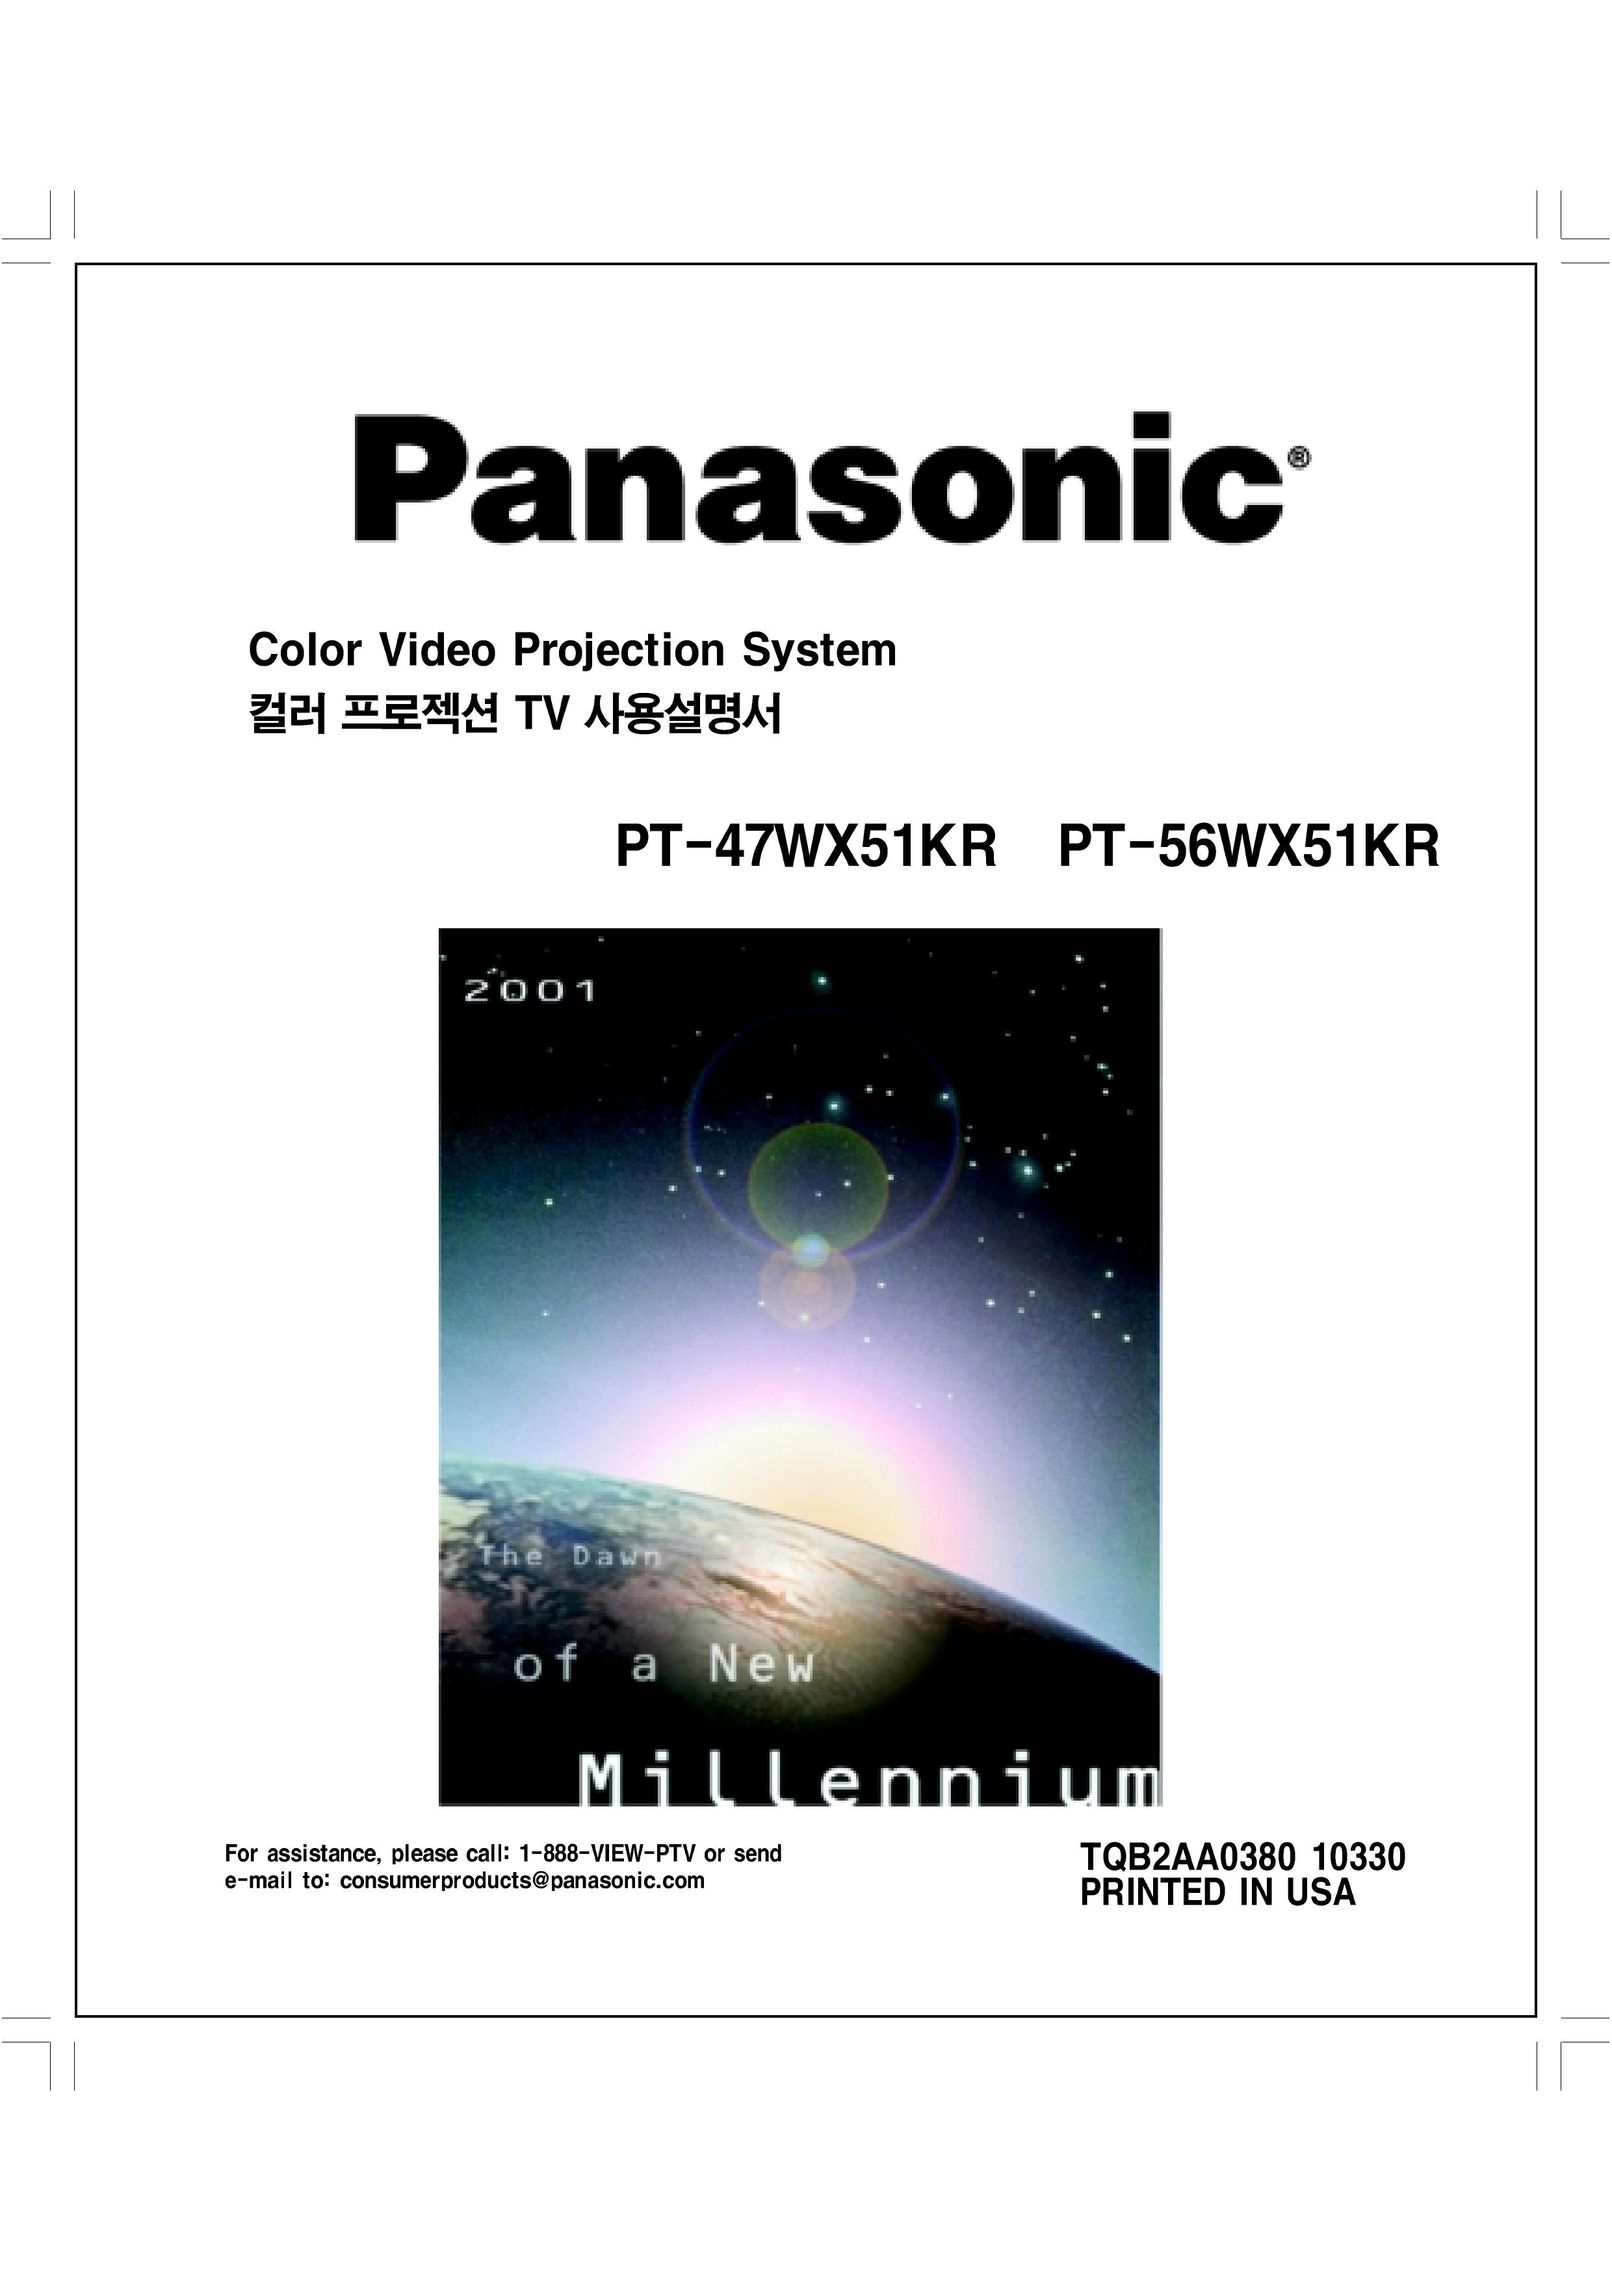 Panasonic PT-47WX51KR Projector User Manual